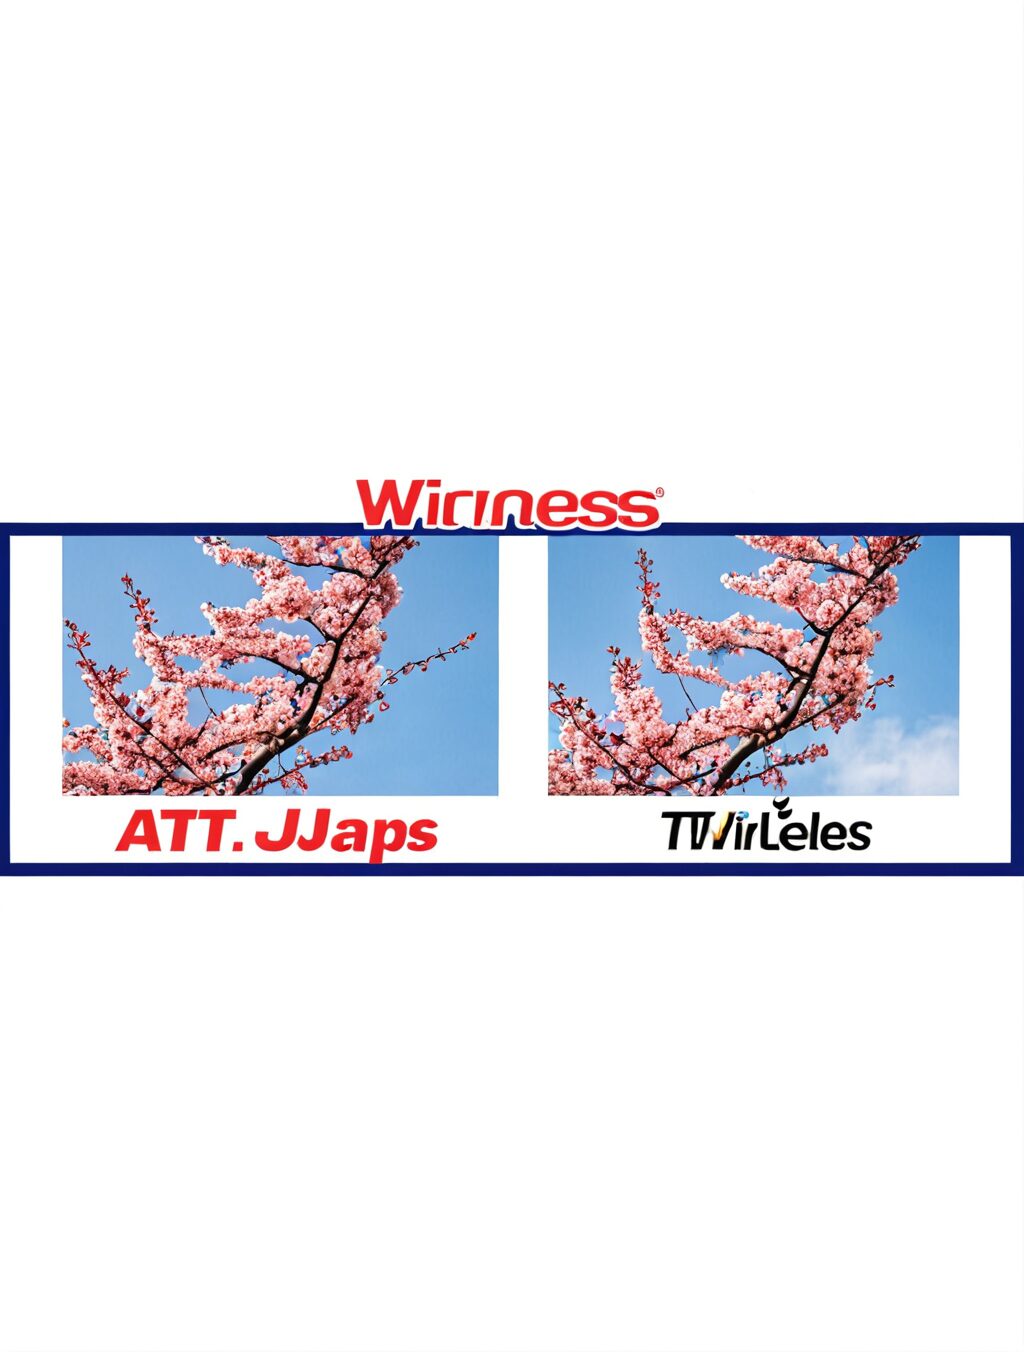 att wireless travel to japan